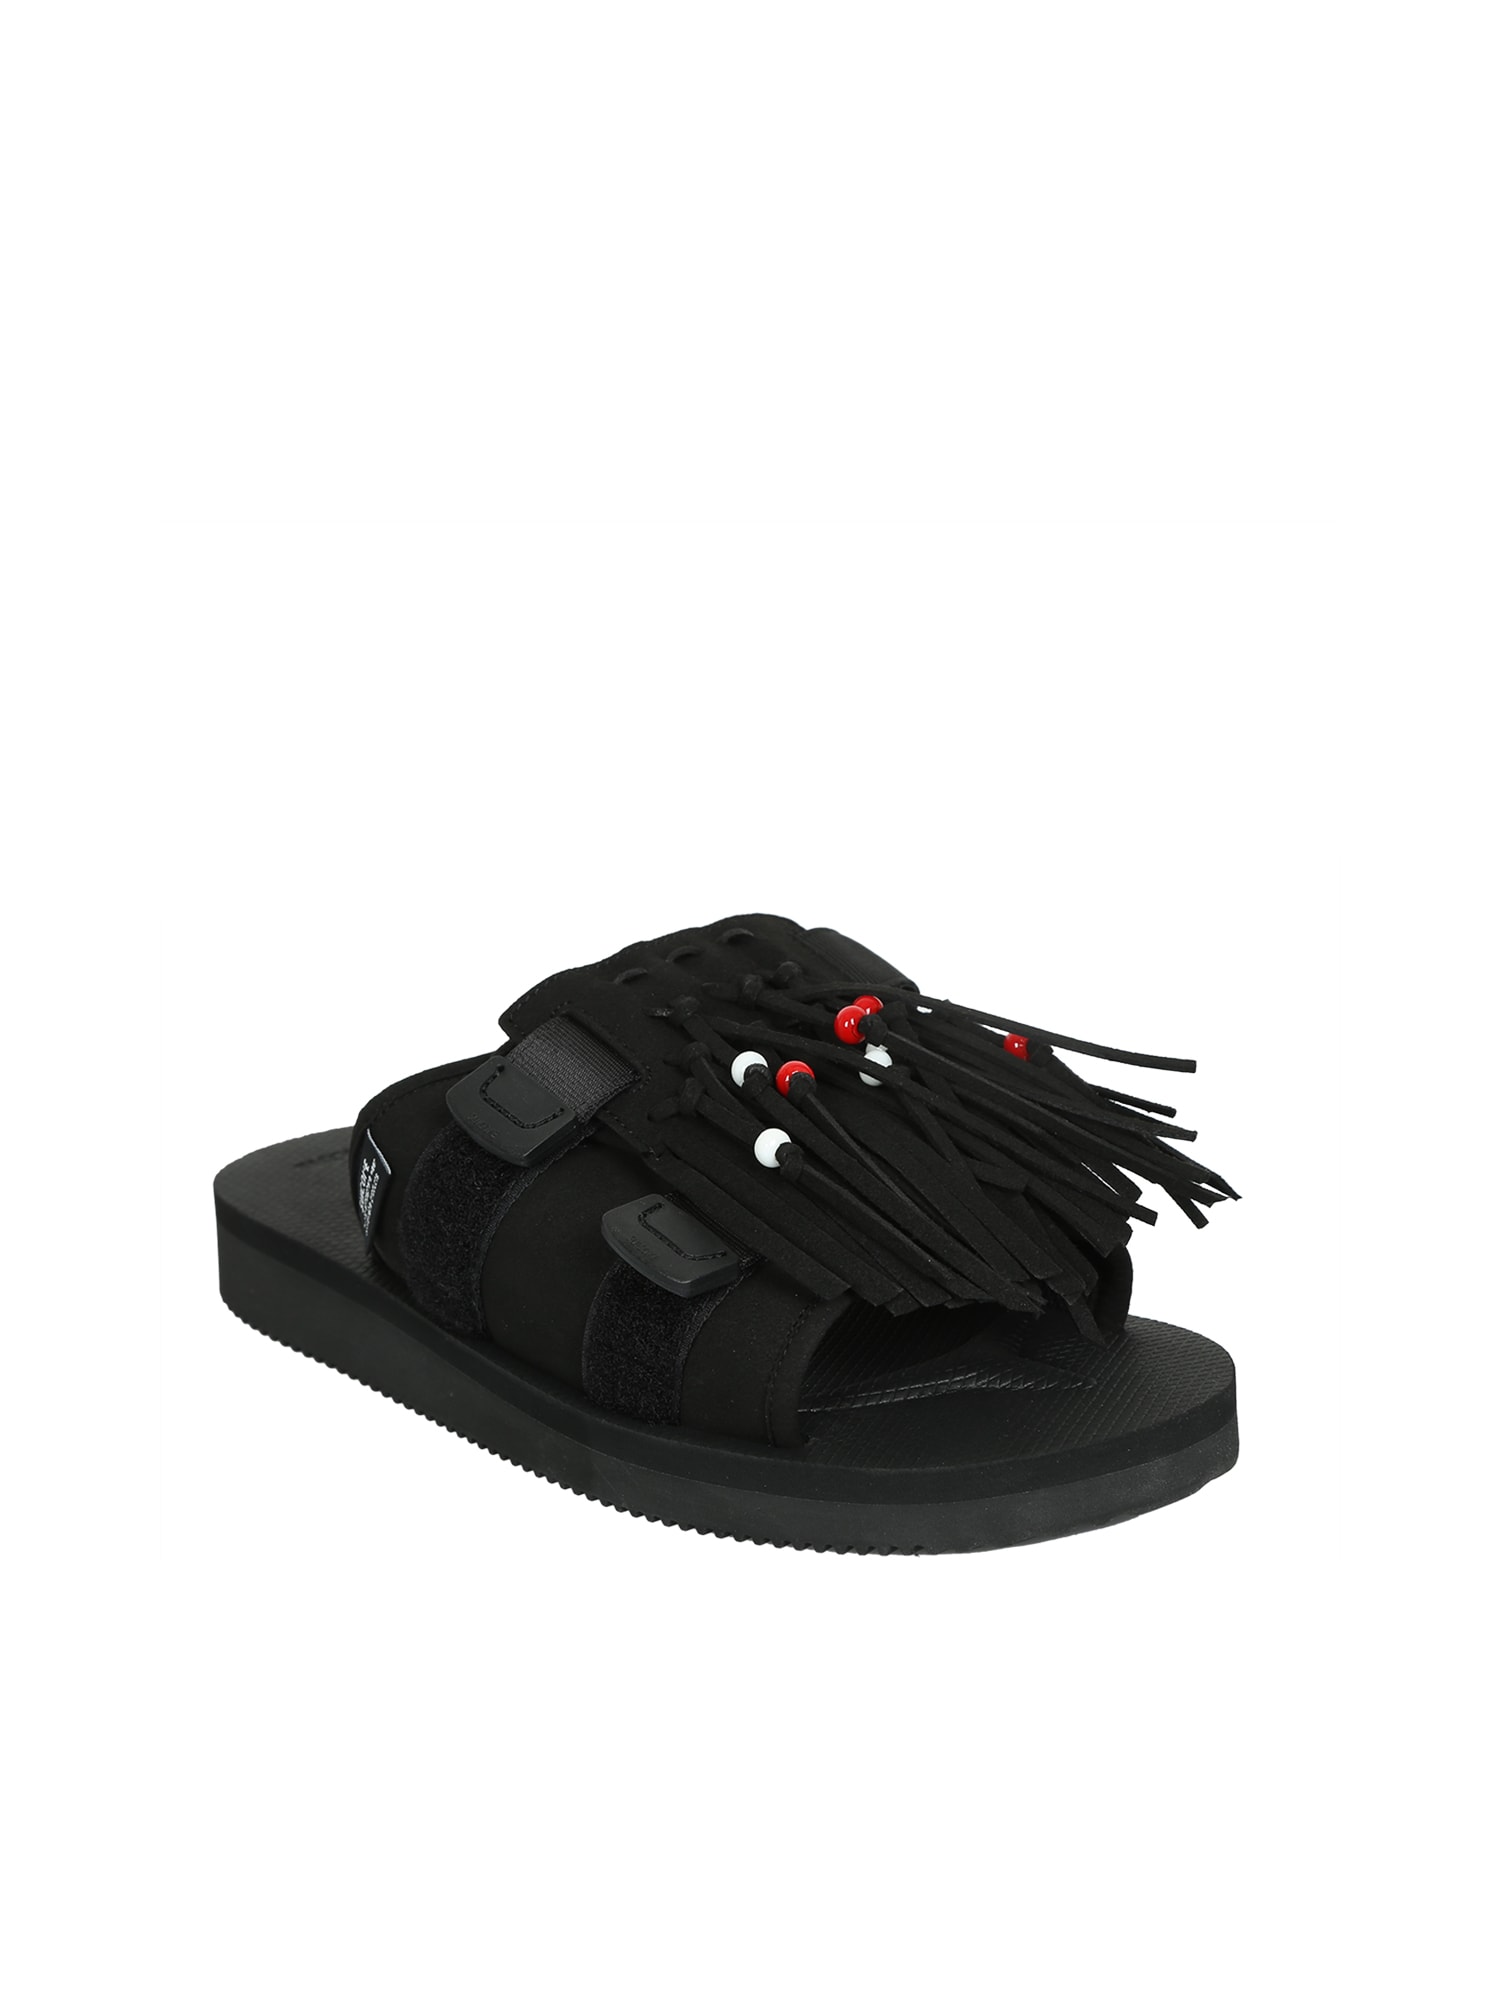 Shop Suicoke Hoto-cab Fringed Black Sandals